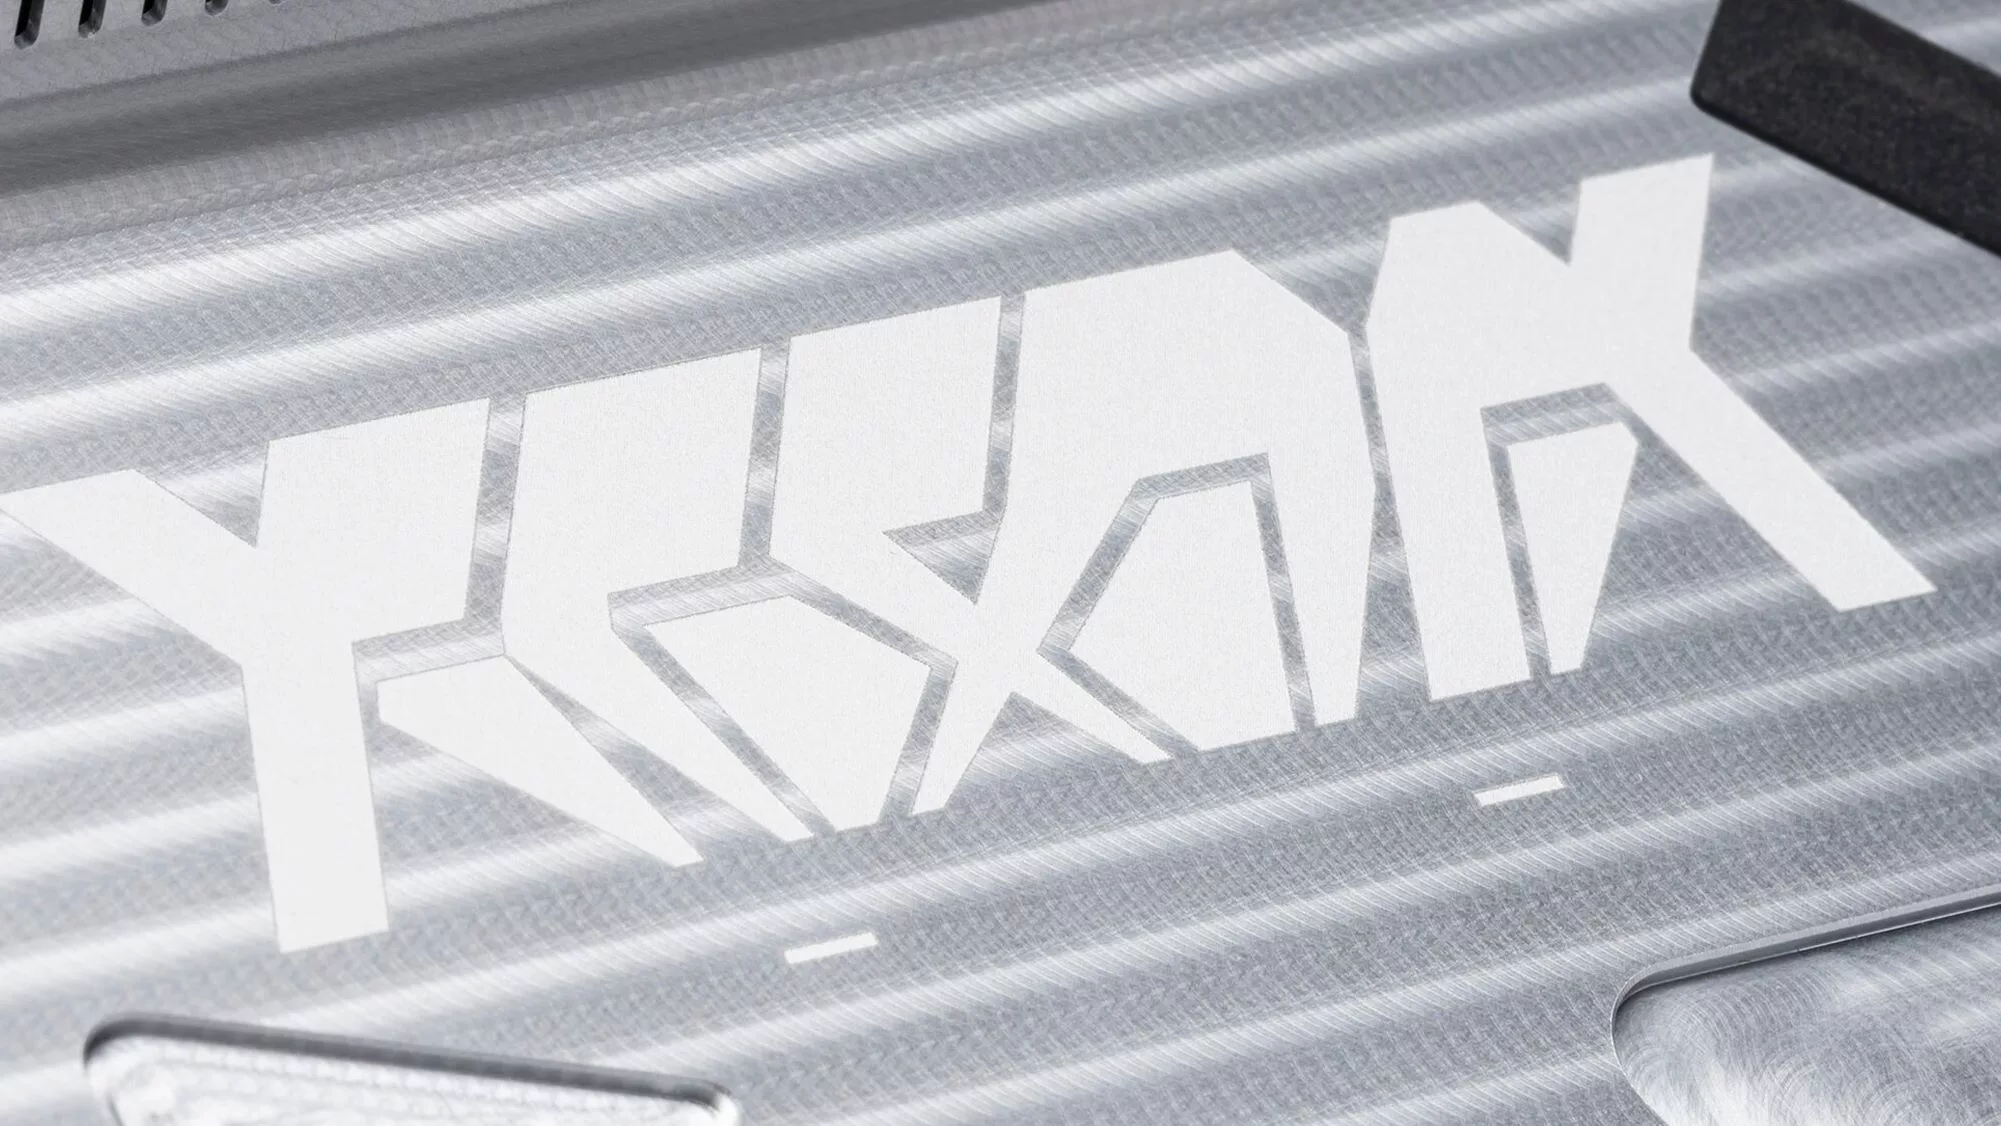 Extreme close up of stylized ACRONYM logo on rear of RMT02